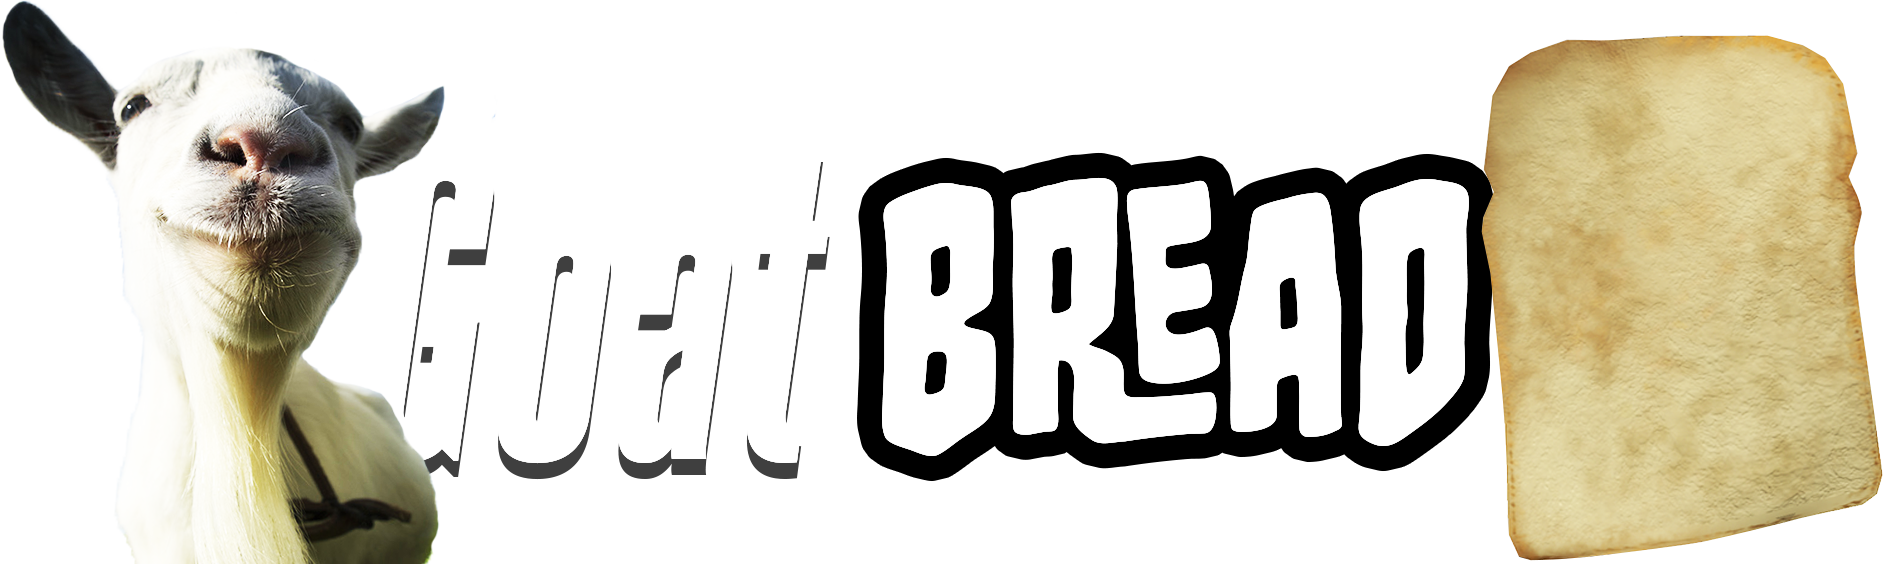 GoatBread Logo